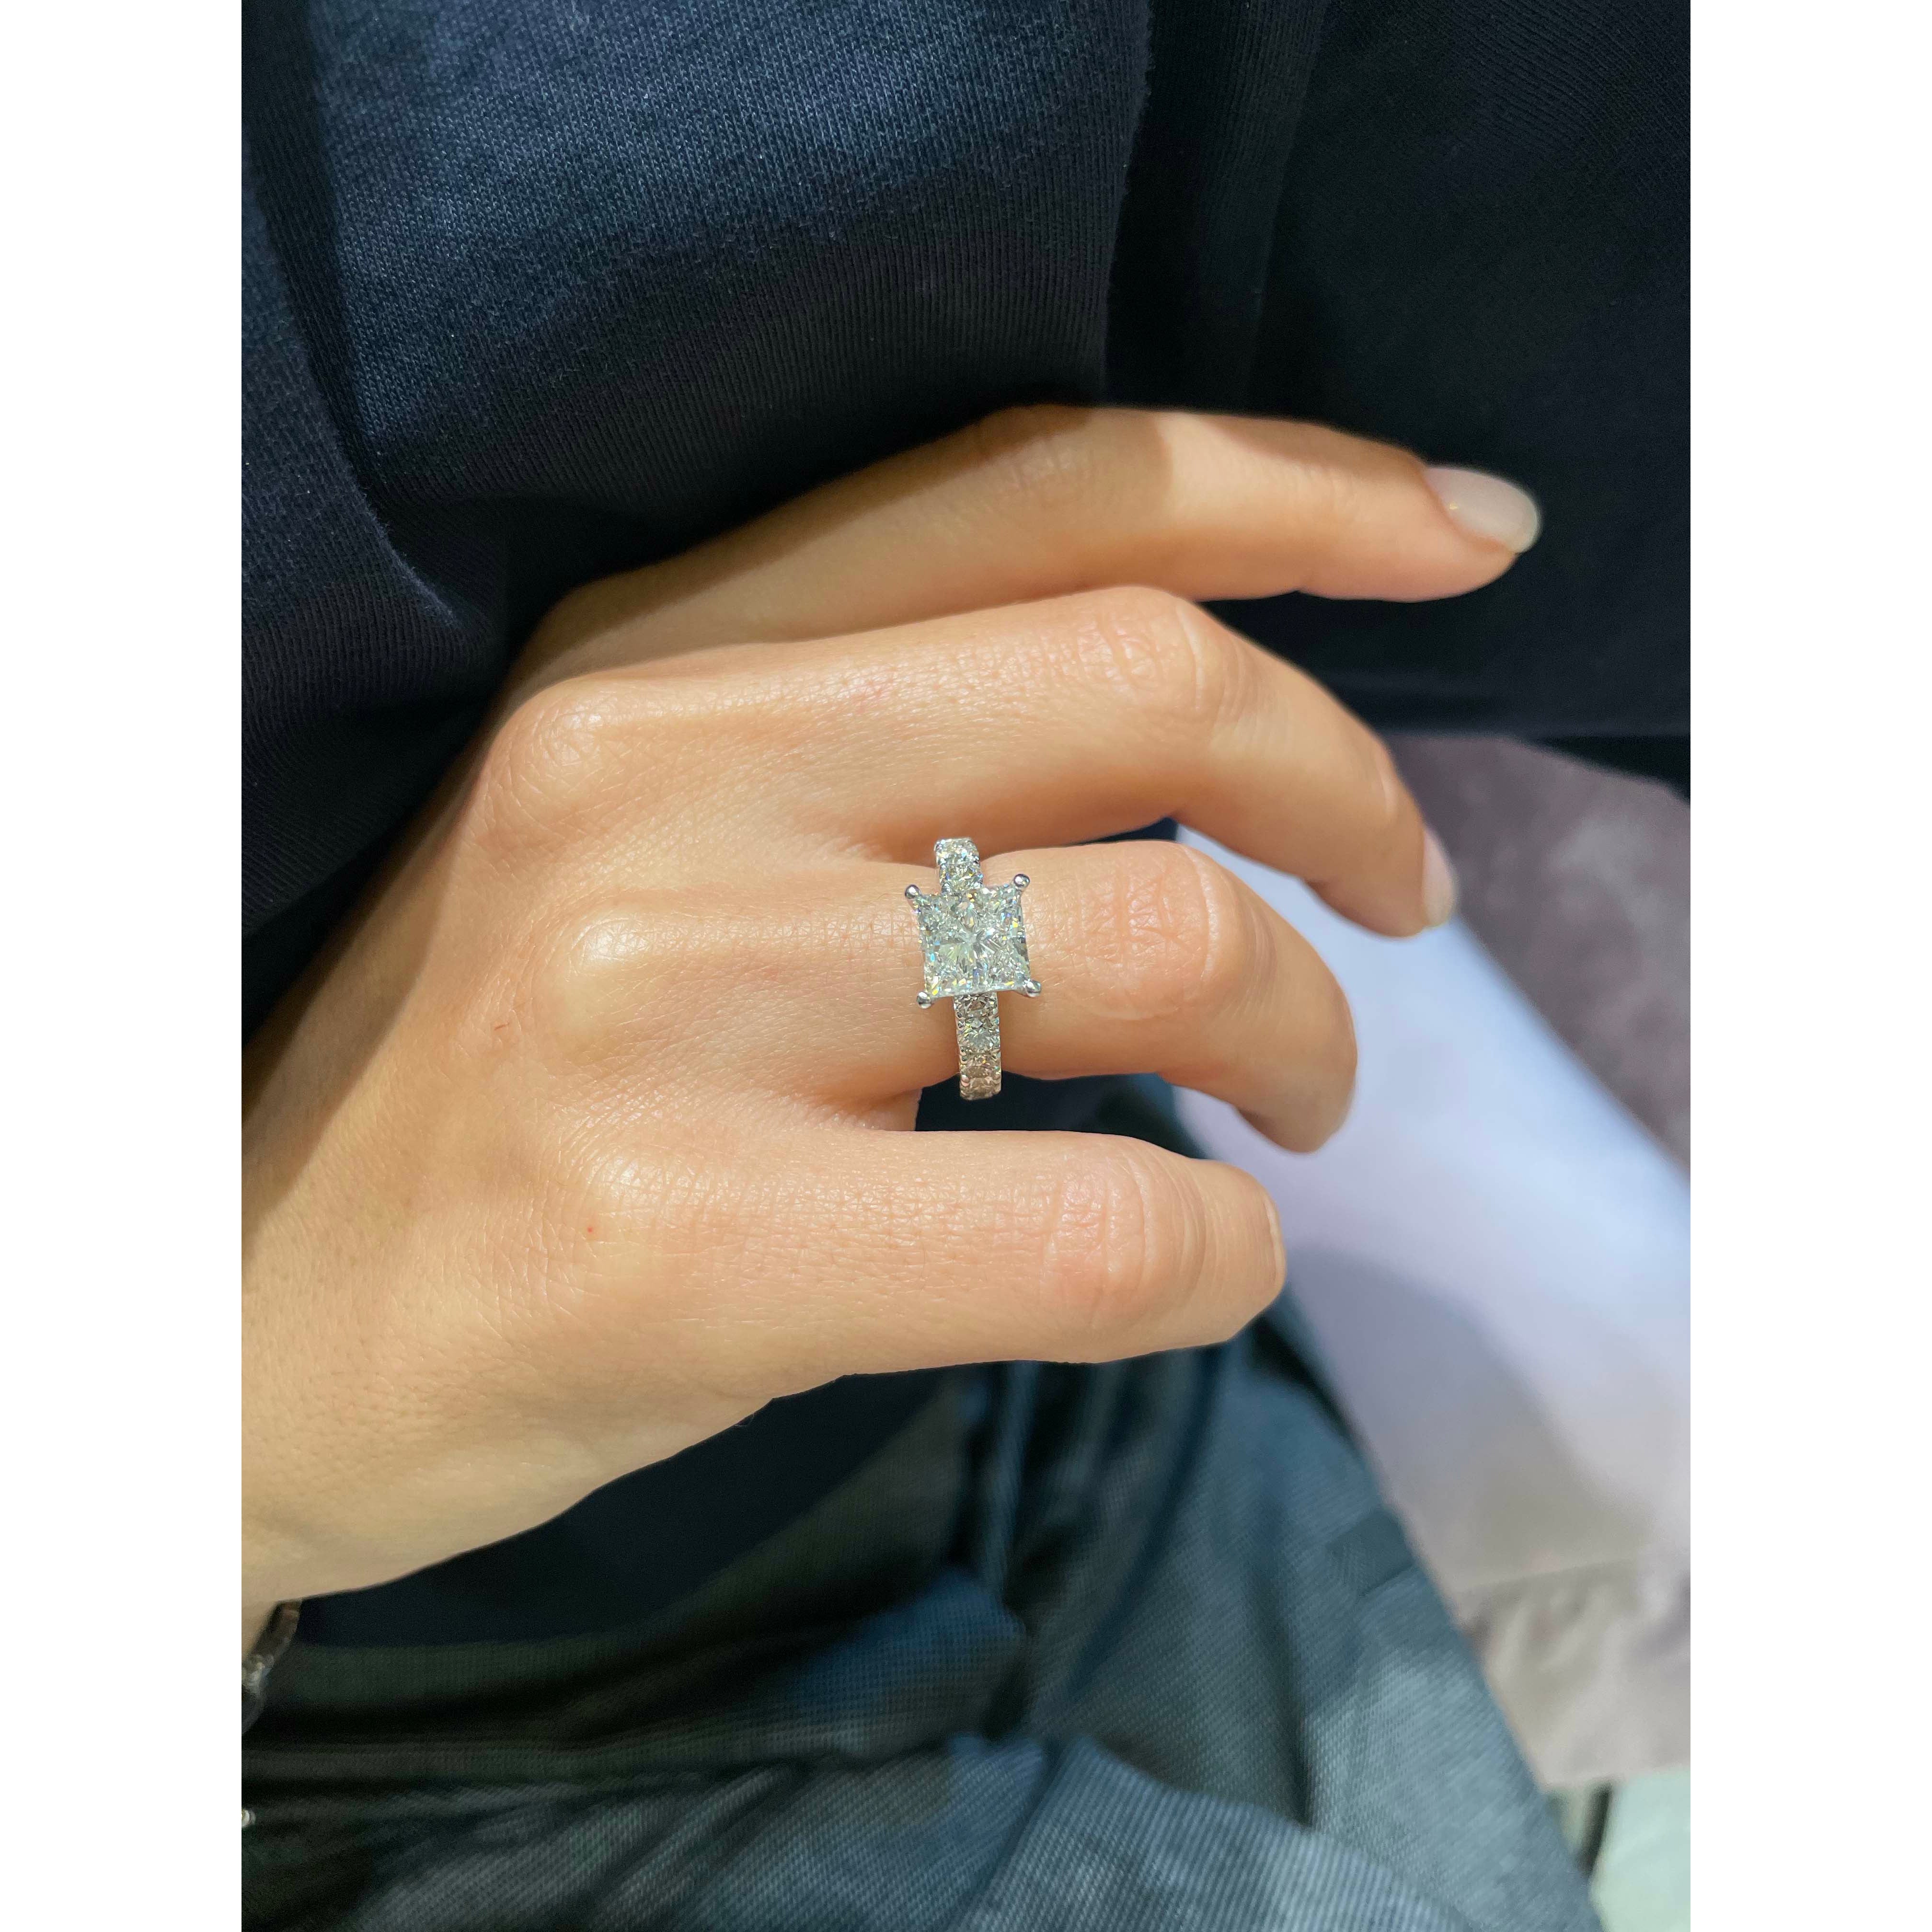 Molly Diamond Engagement Ring   (3.5 Carat) -14K White Gold